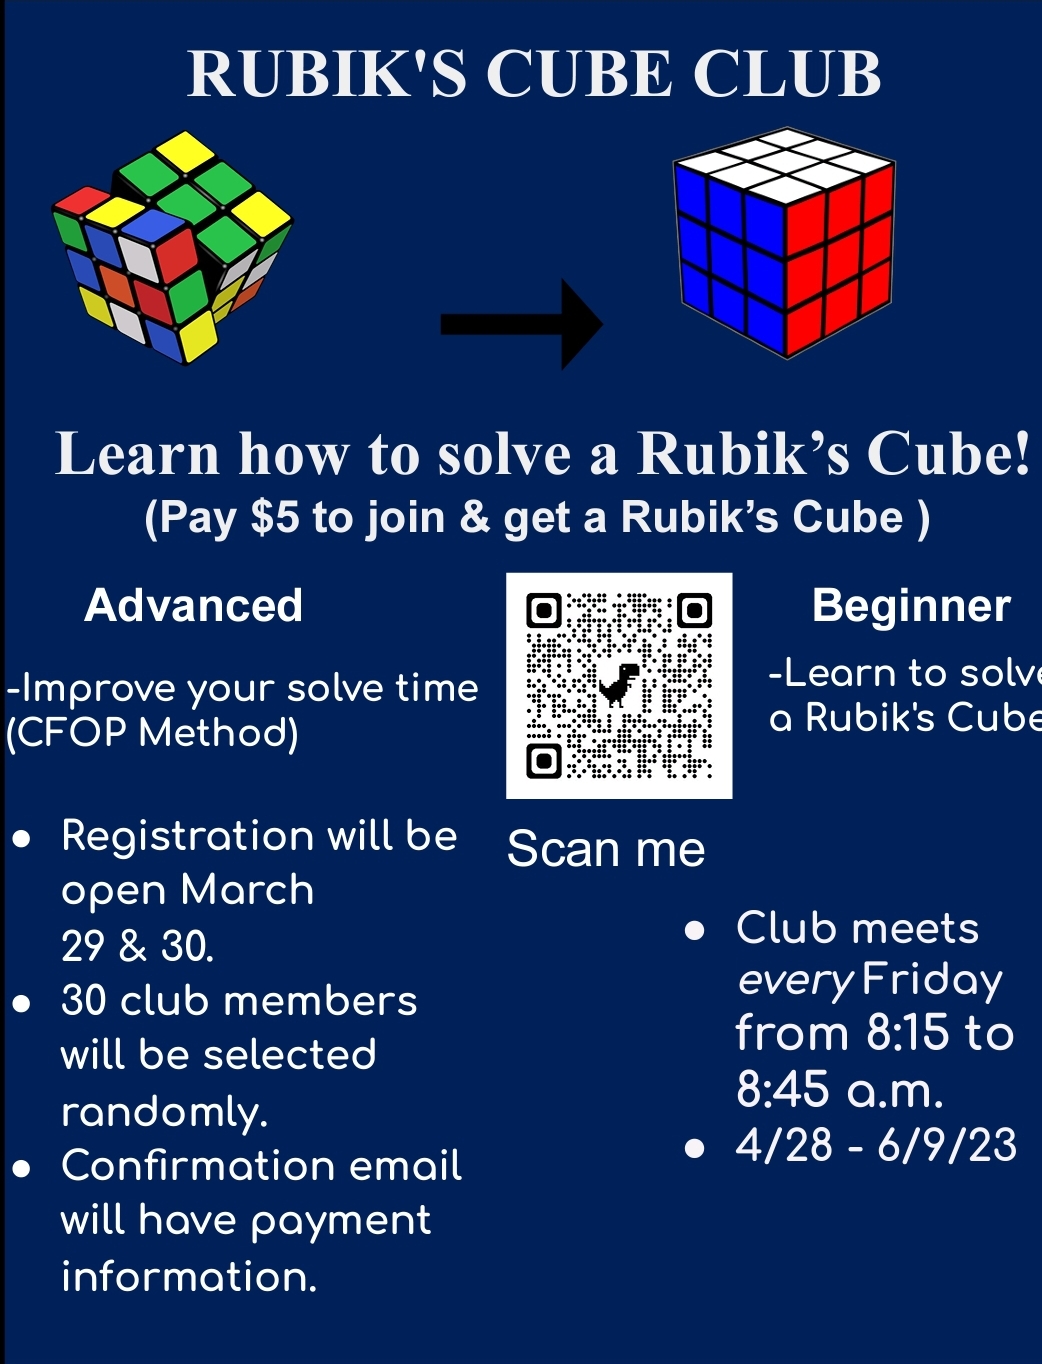 Rubik's Cube Club